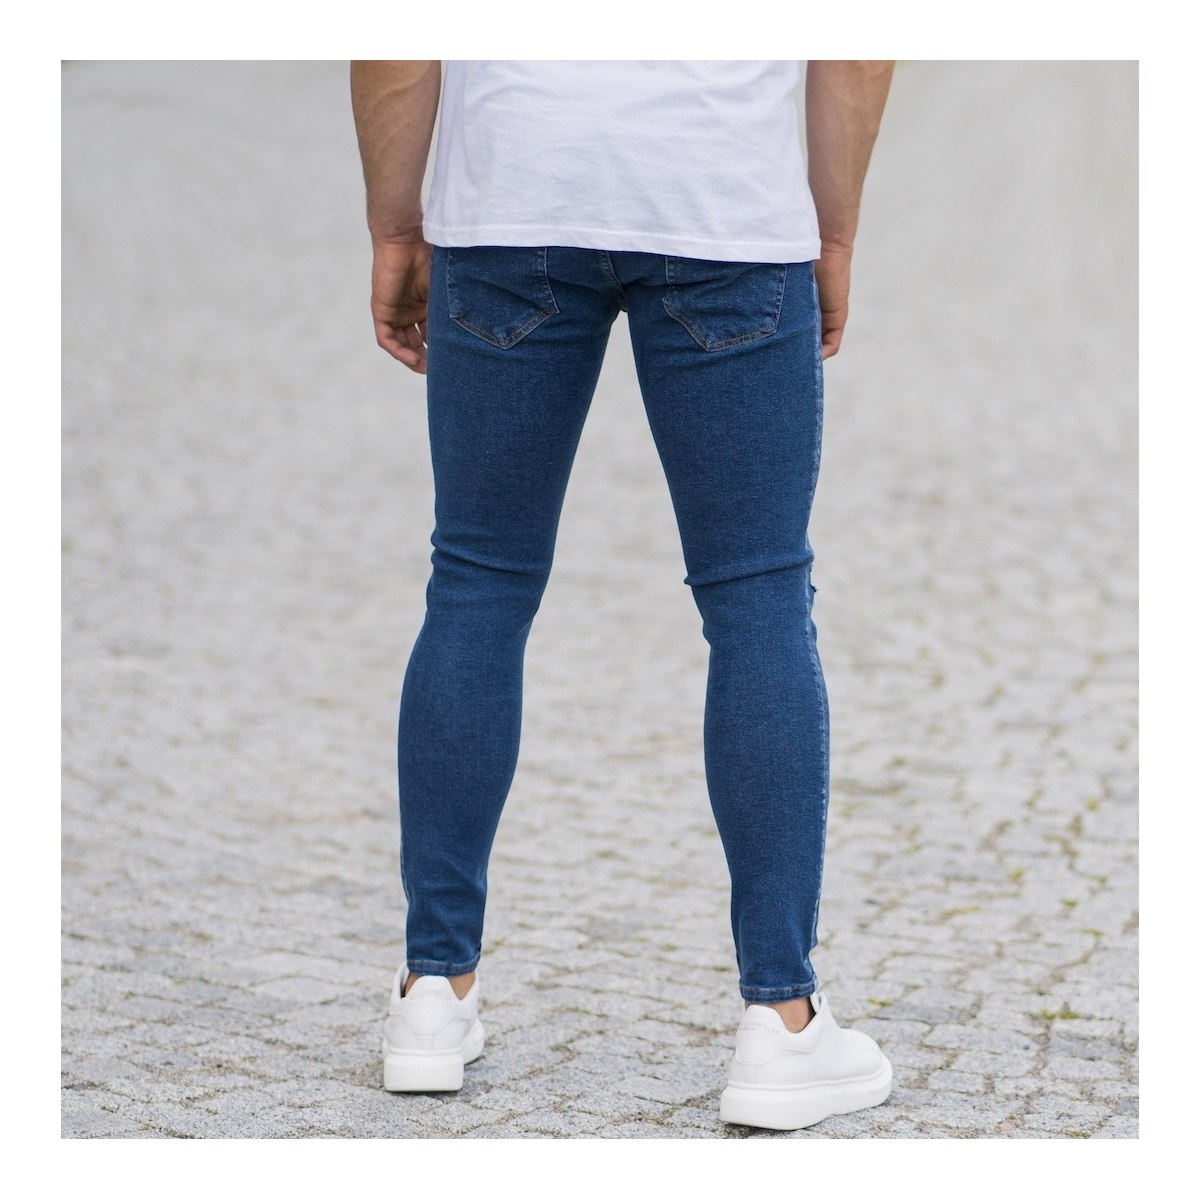 Men's Distorted Leg Skinny Jeans In Navy Blue